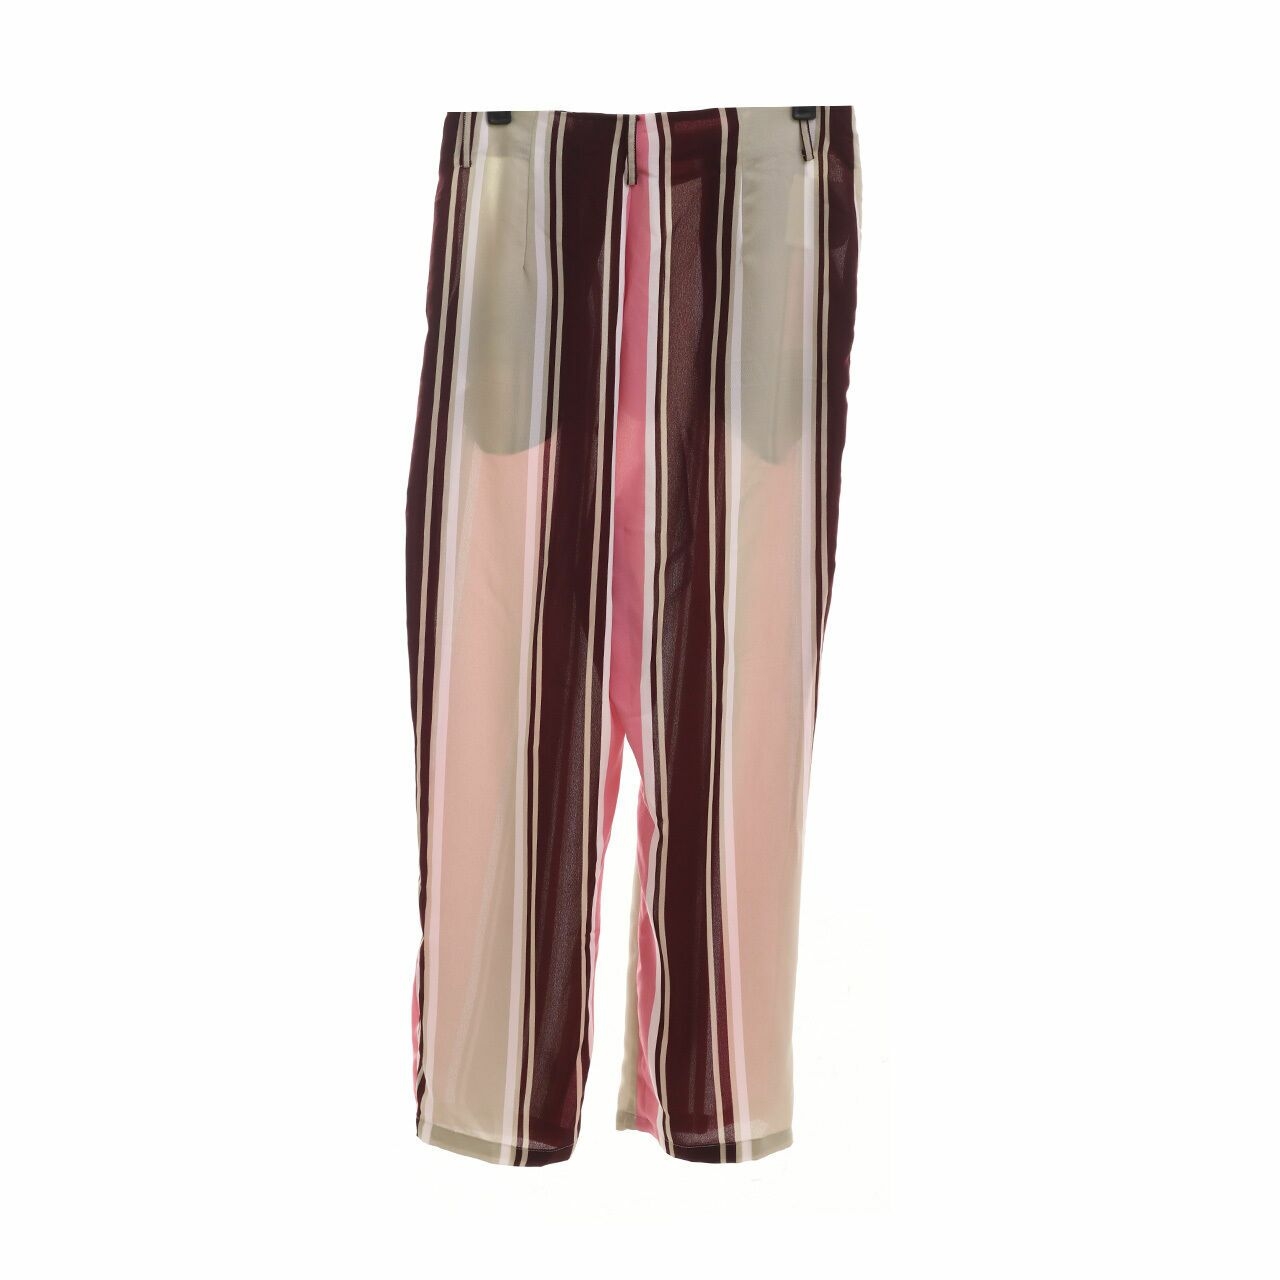 ALLEA Itang Yunasz Multi Stripes Long Pants